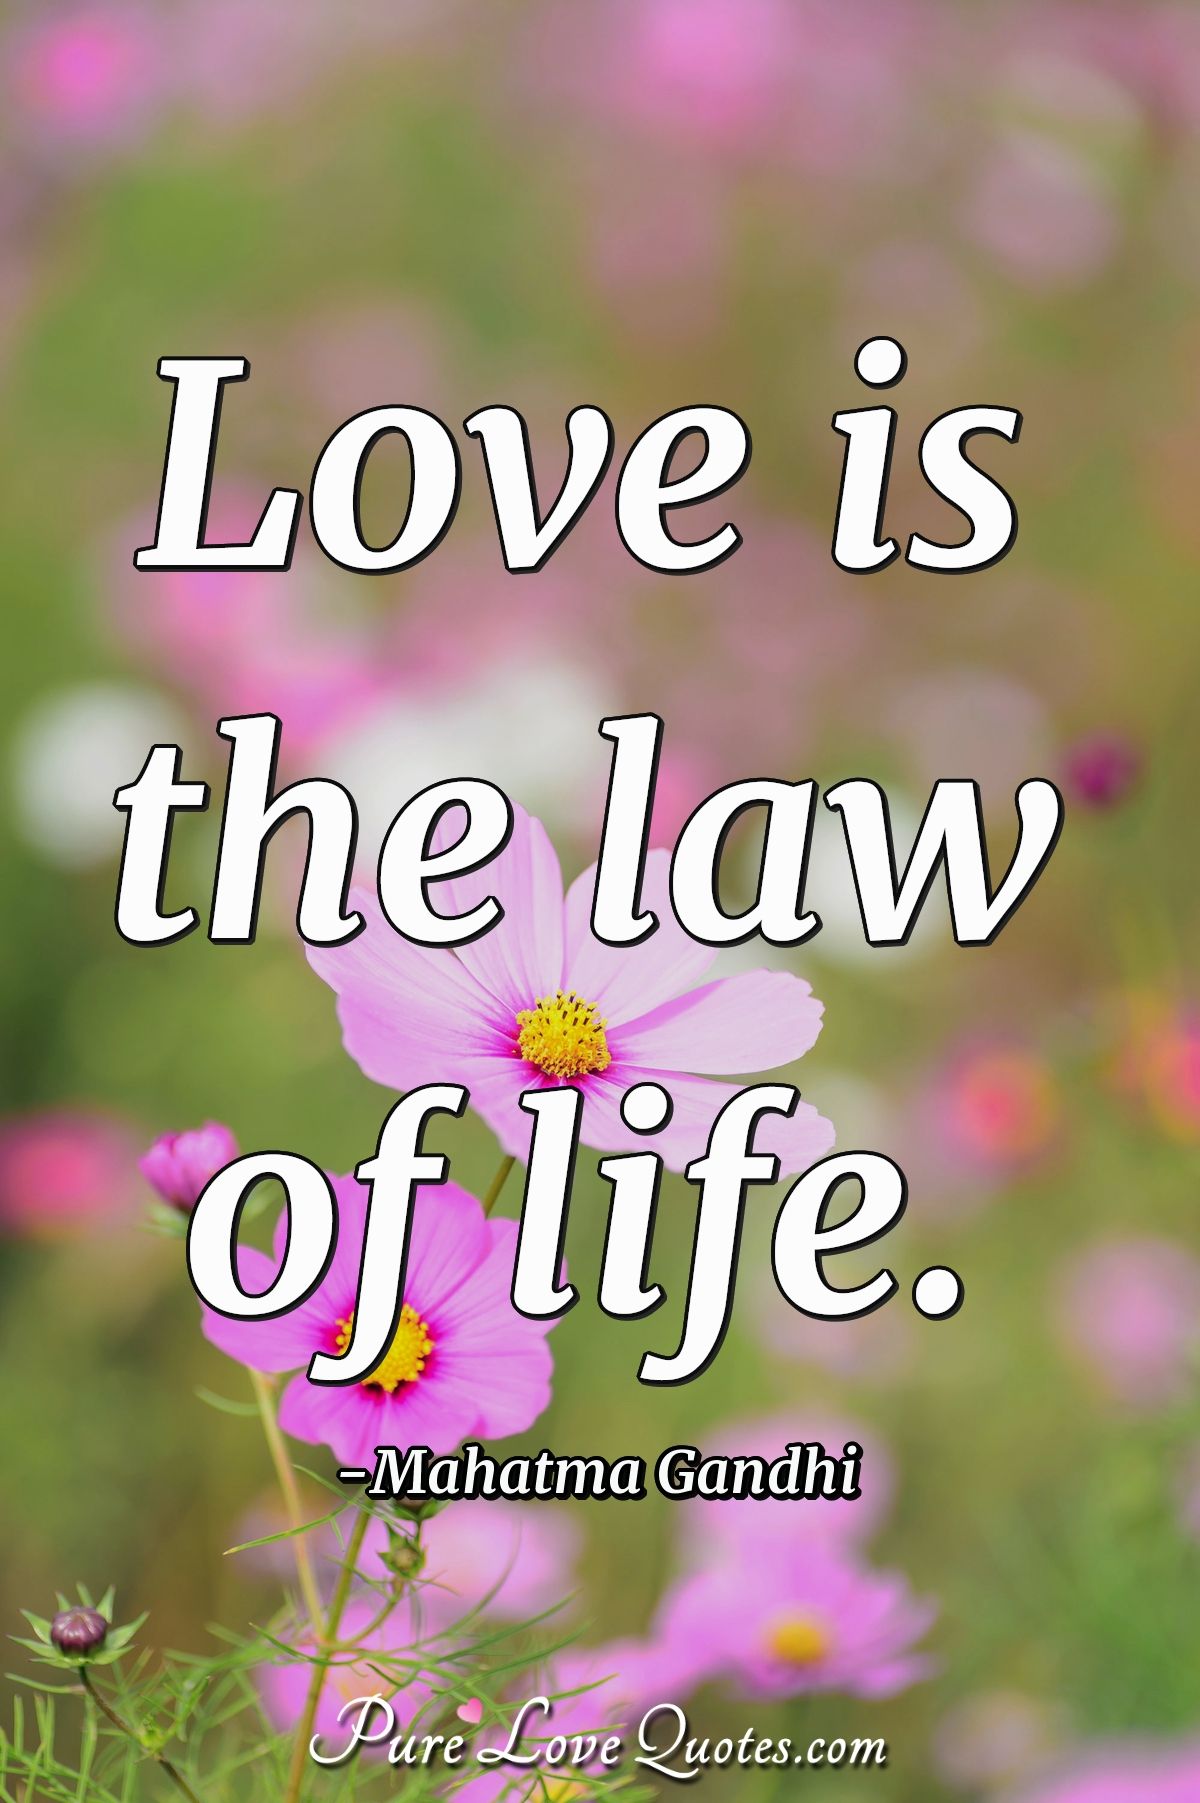 Love is the law of life. - Mahatma Gandhi